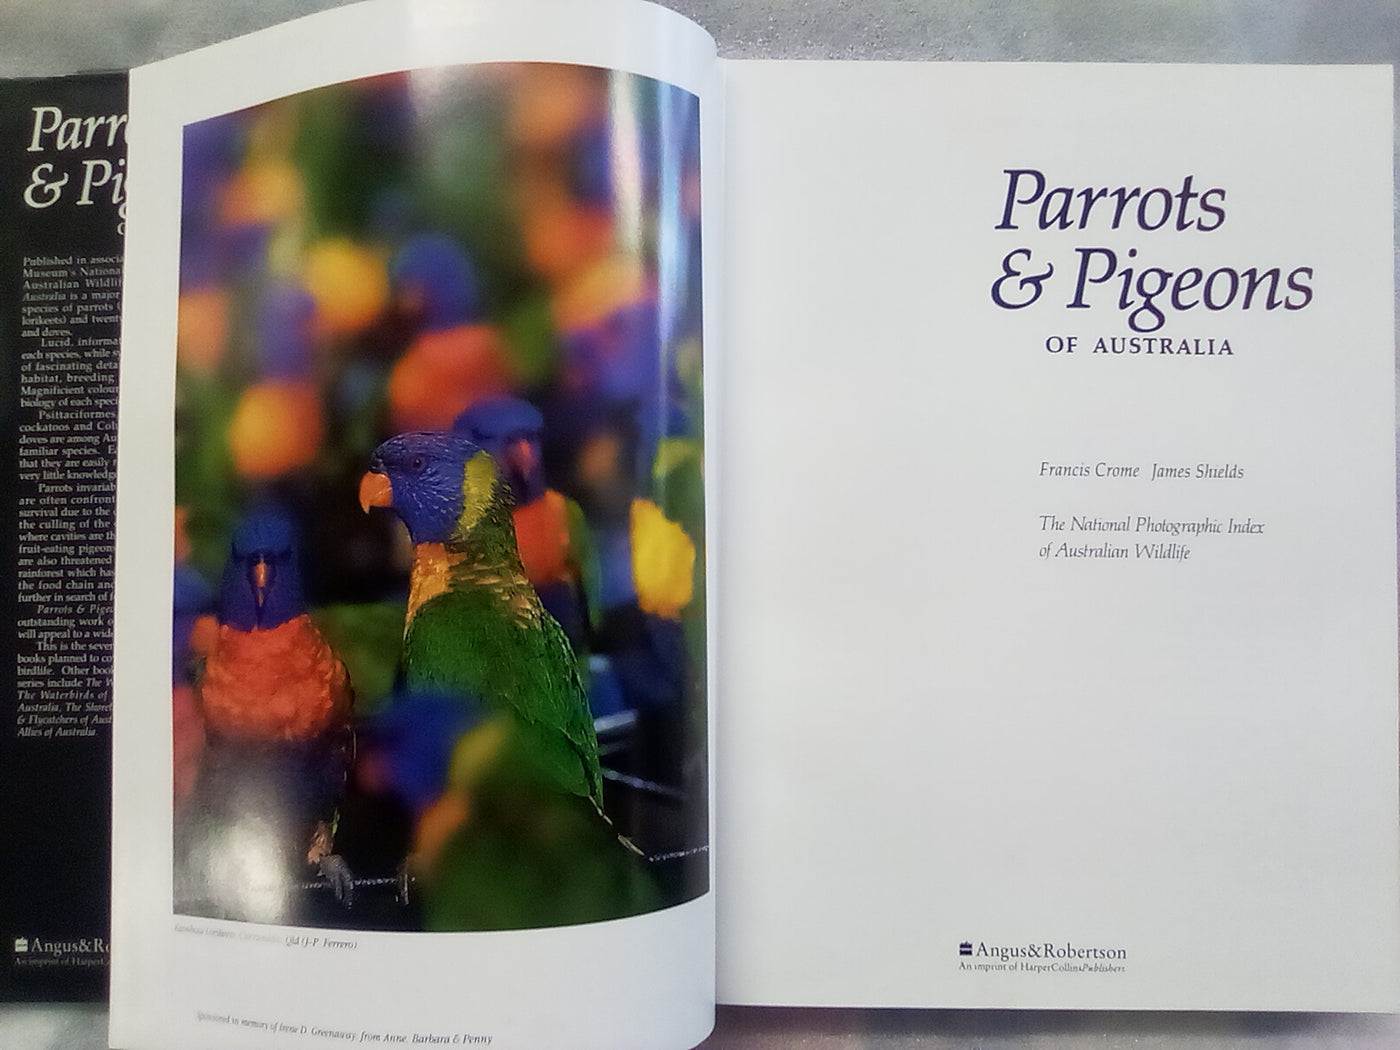 Parrots & Pigeons of Australia - Index of Australian Wildlife